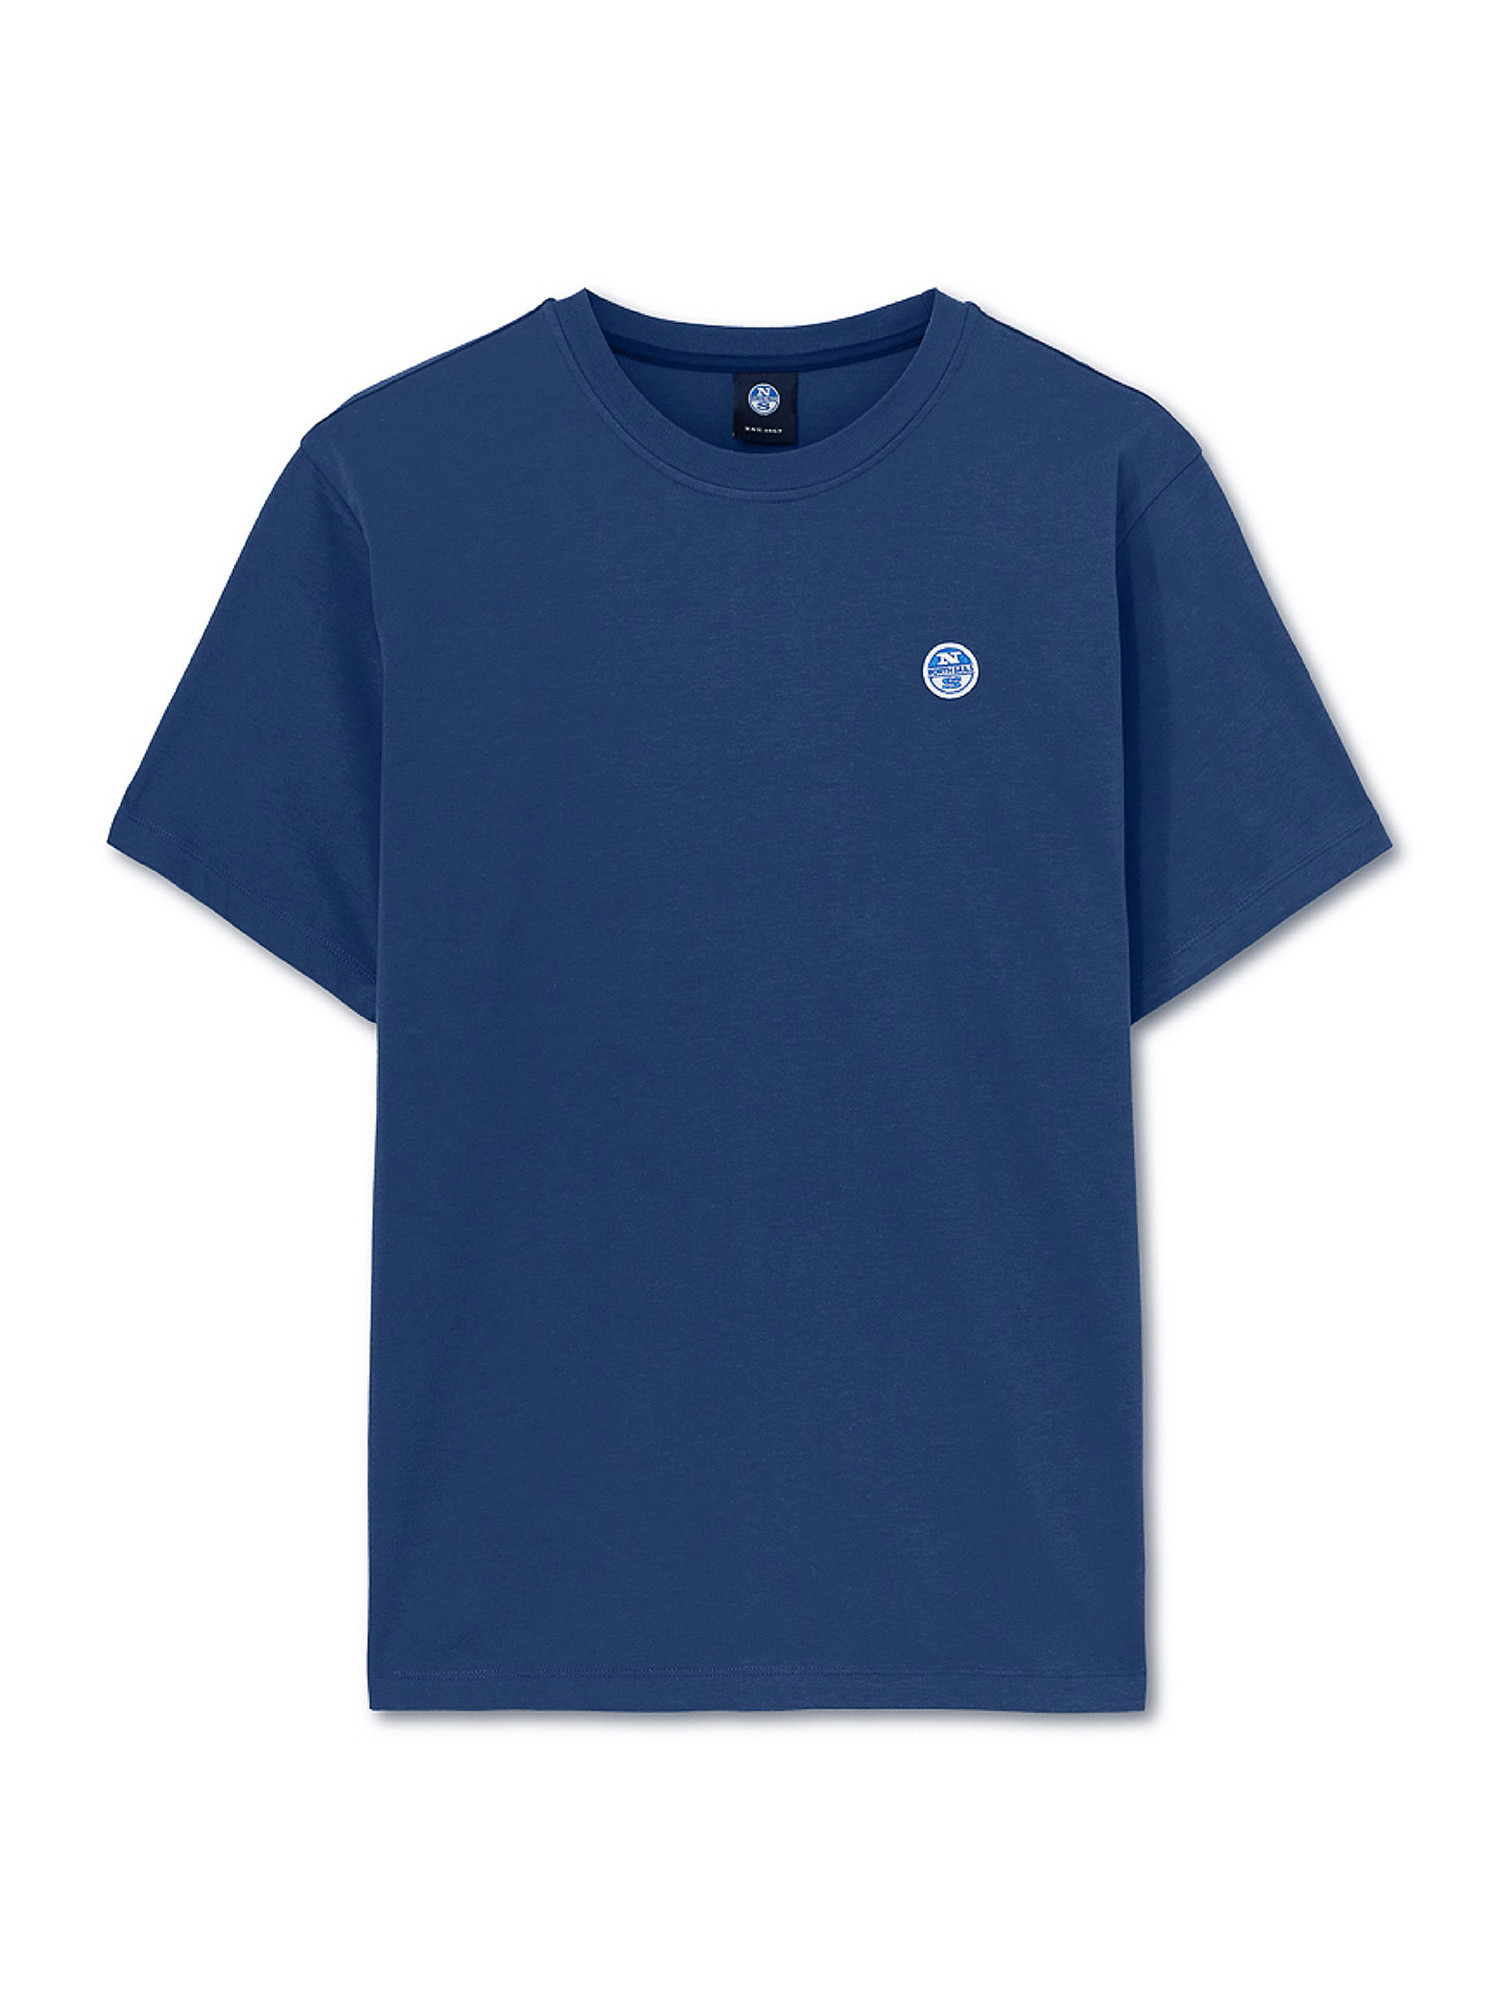 T-shirt manica corta con logo, Blu chiaro, large image number 0